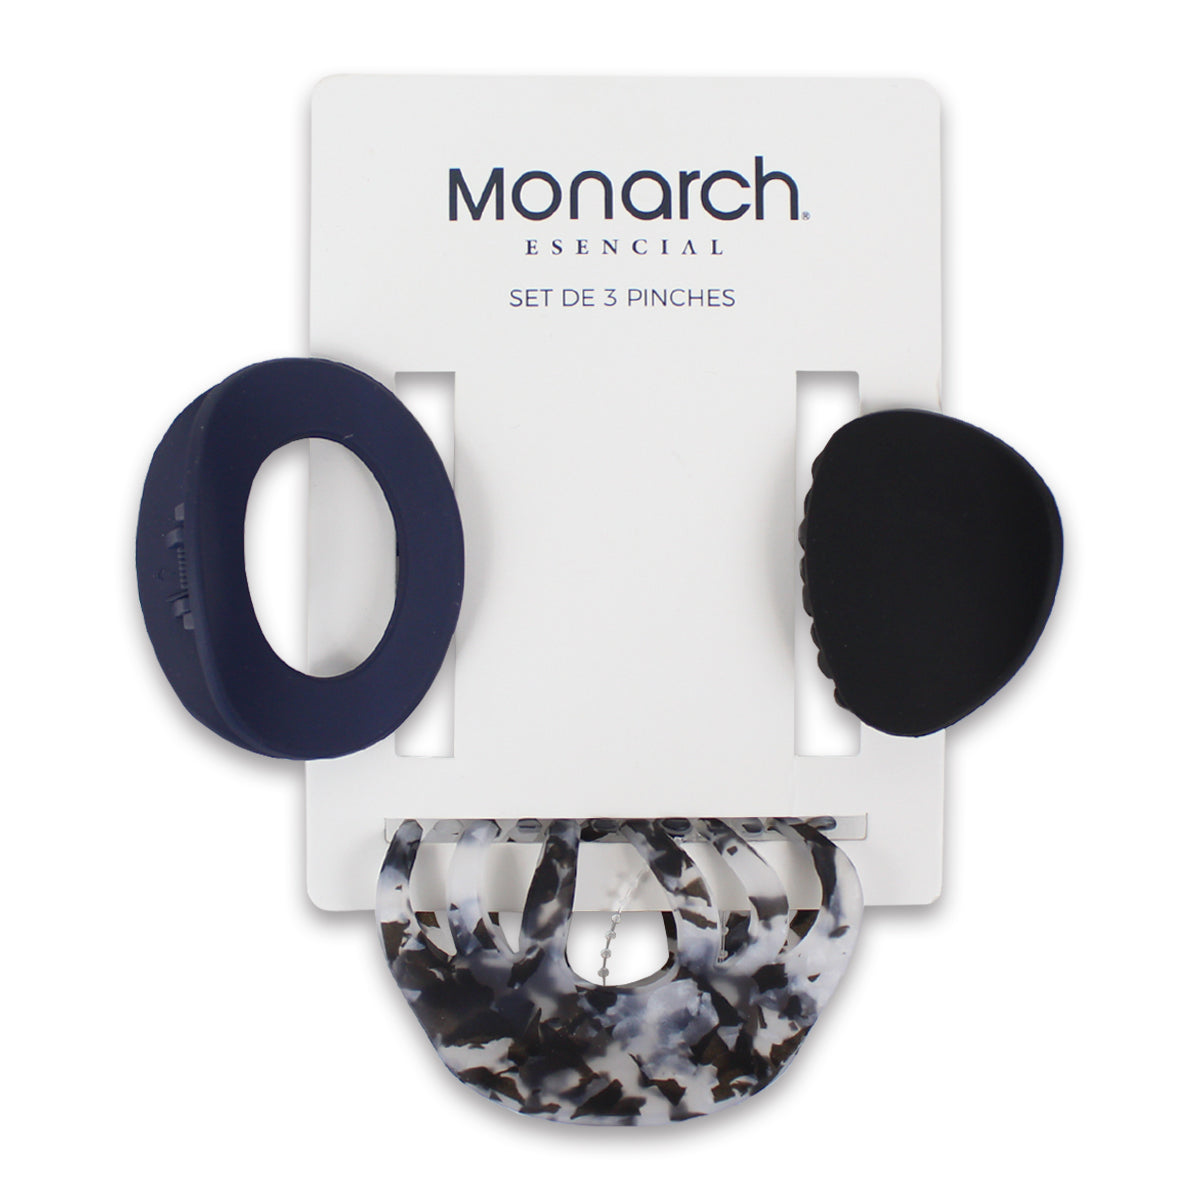 Monarch - Set 3 Pinches